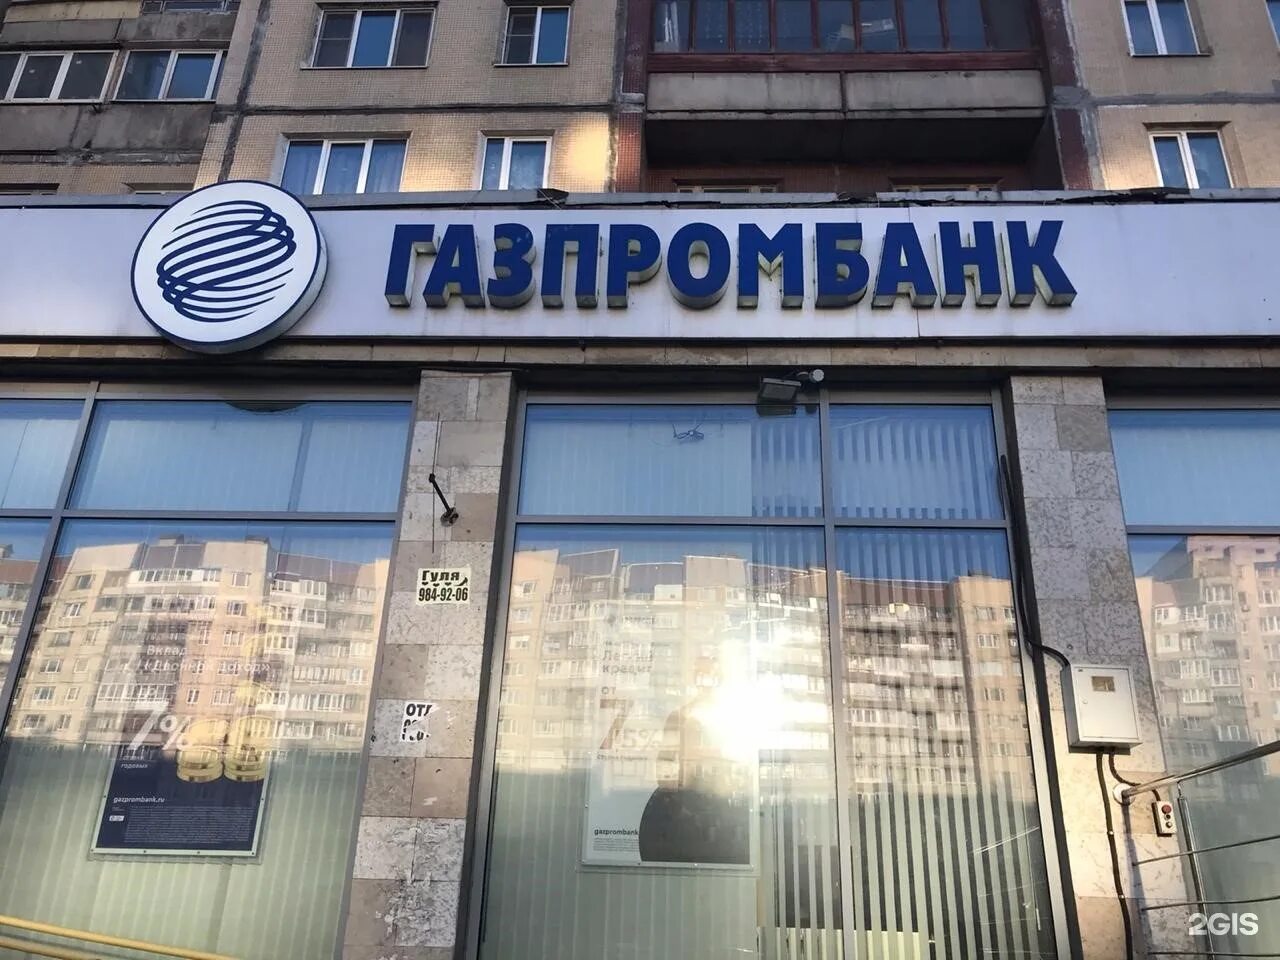 Газпромбанк. Банк Газпромбанк. Банк Газпромбанк в Санкт-Петербурге. Газпромбанк Москва.